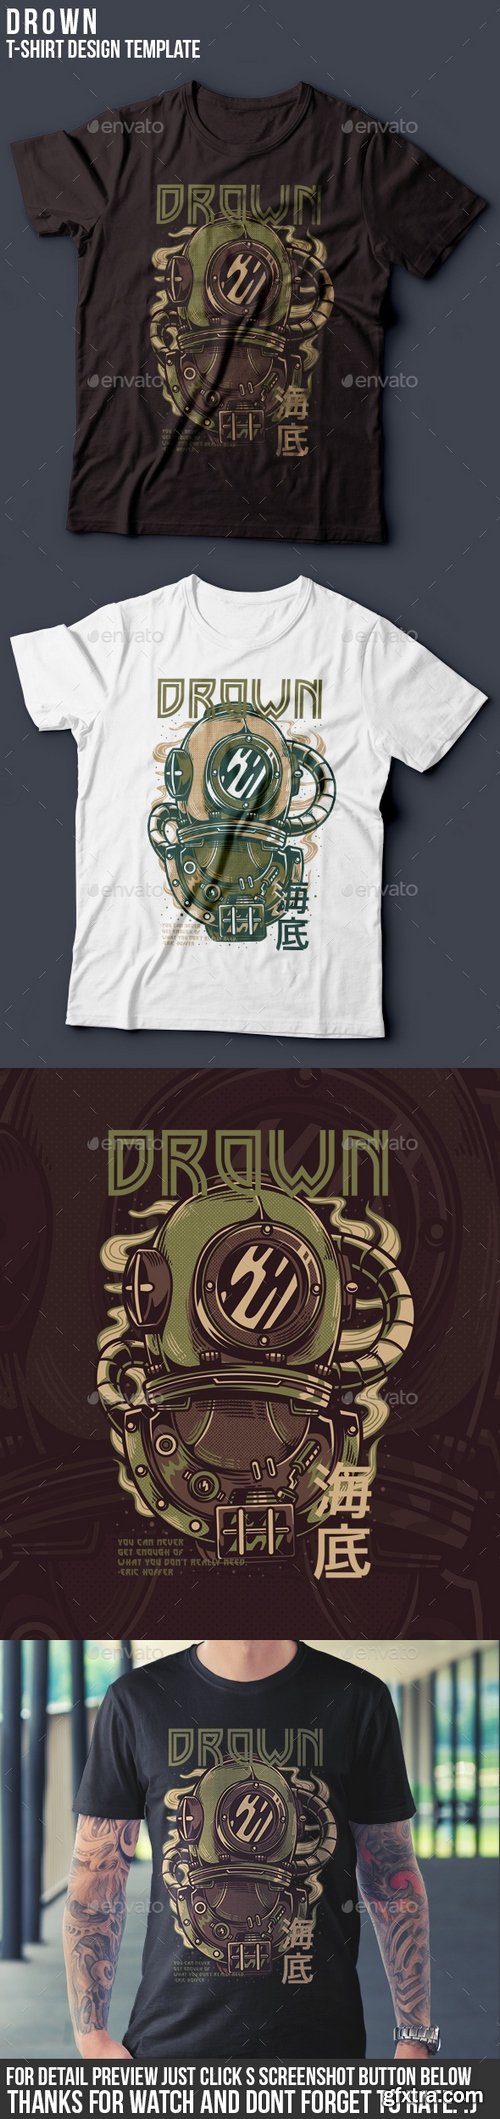 Graphicriver - Drown T-Shirt Design 22061778